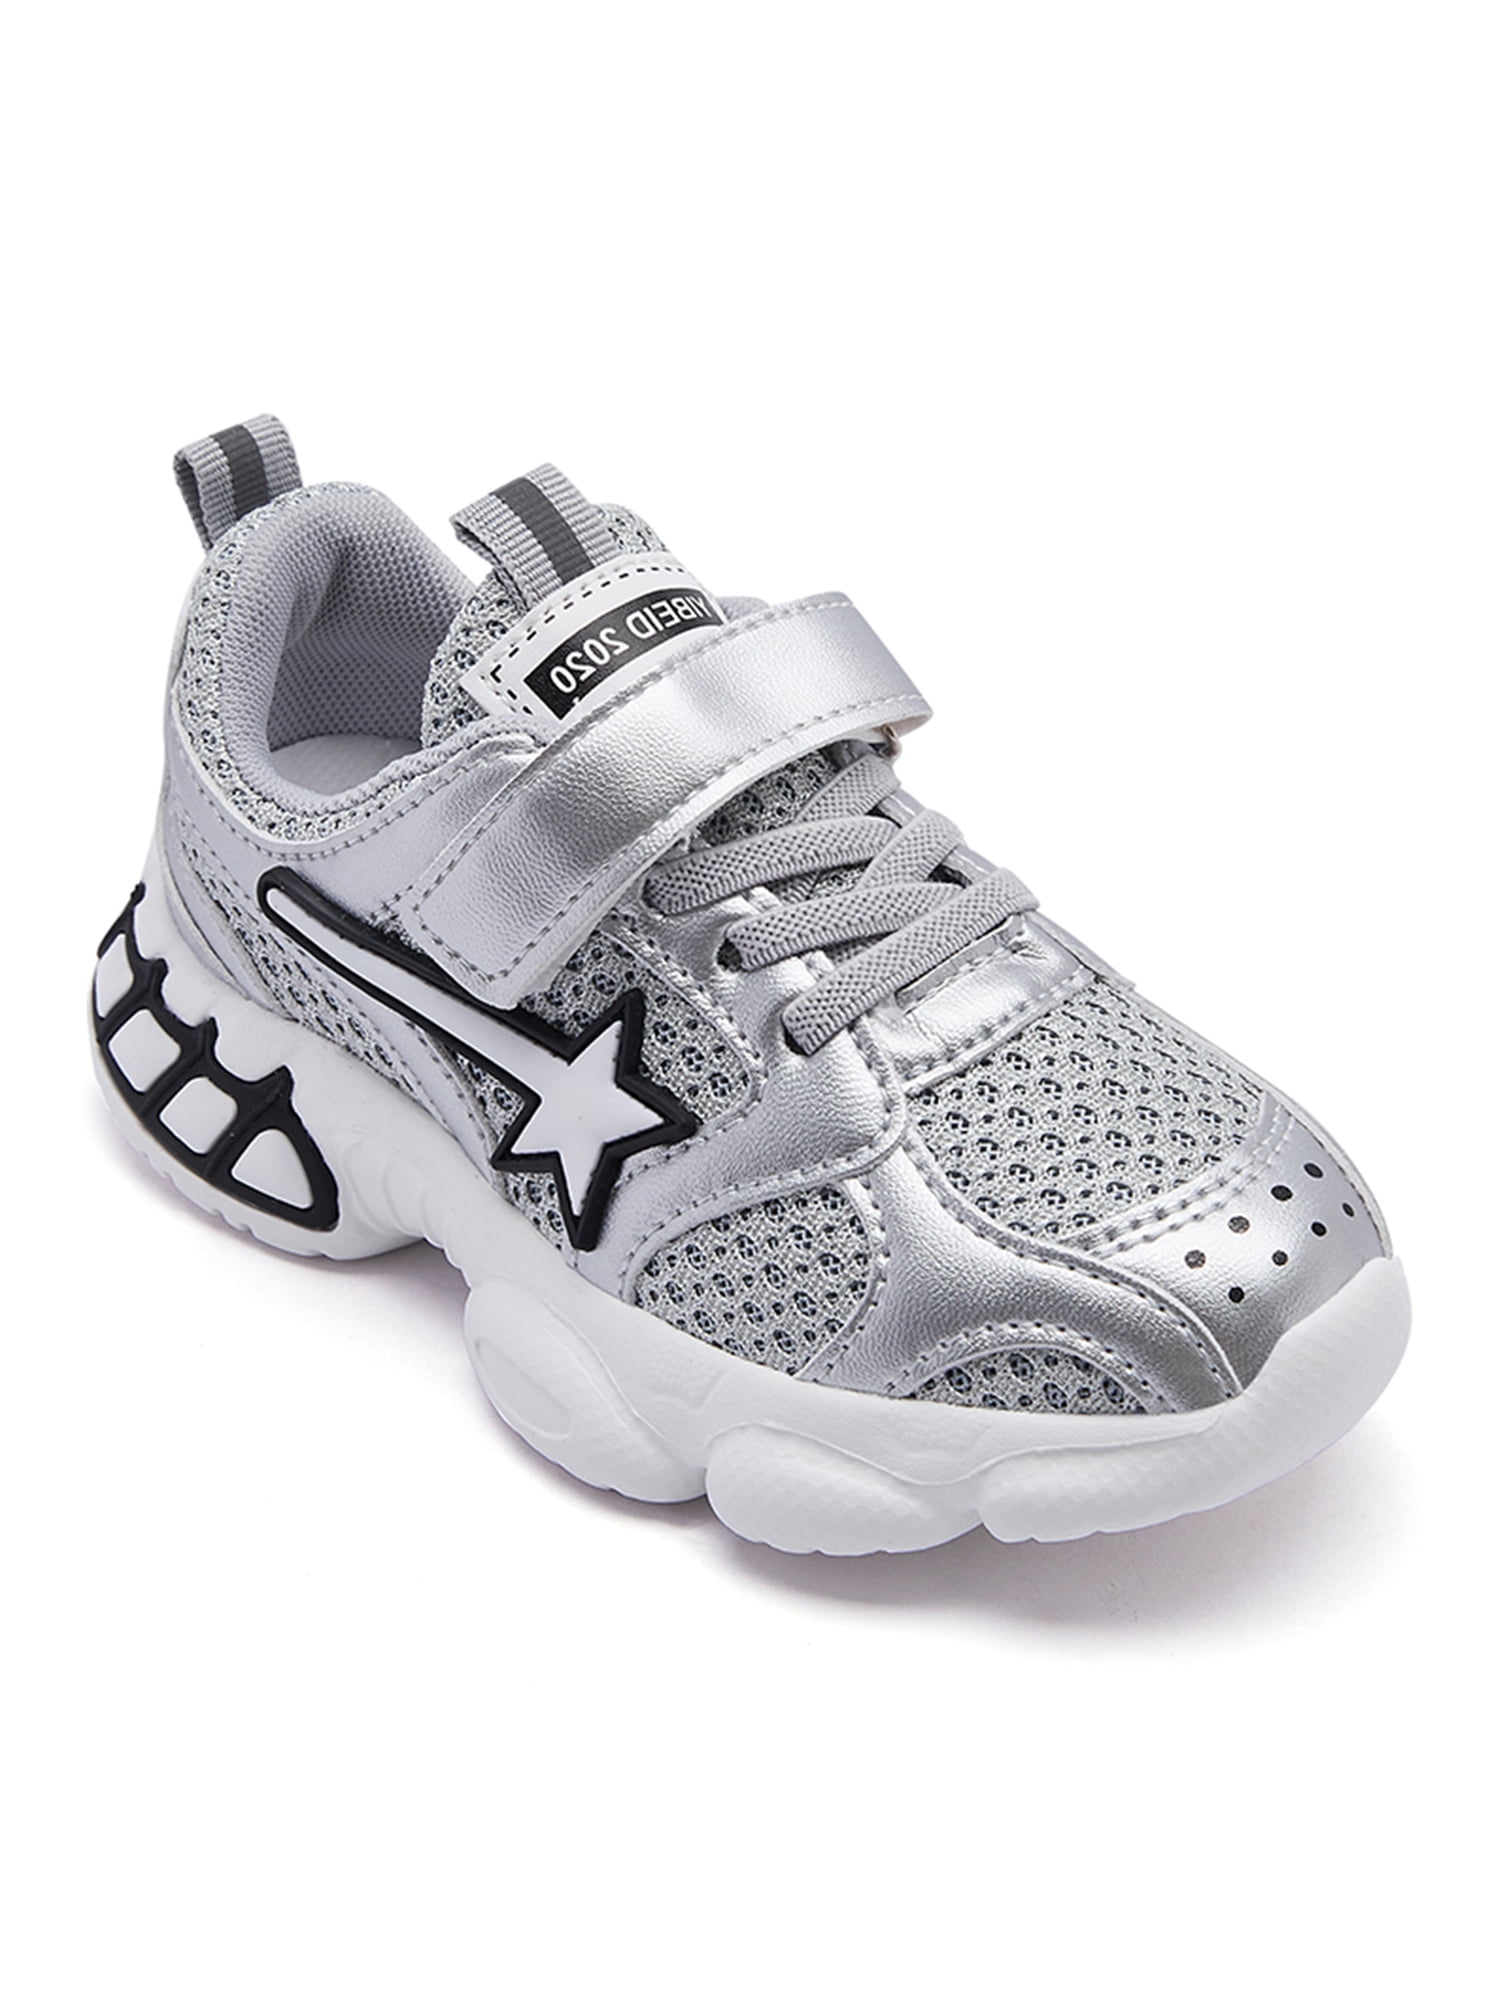 koppu Boys Girls Sneakers Lightweight Breathable Strap Tennis Shoes for Running Walking for Toddler/Little Kid/Big Kid 